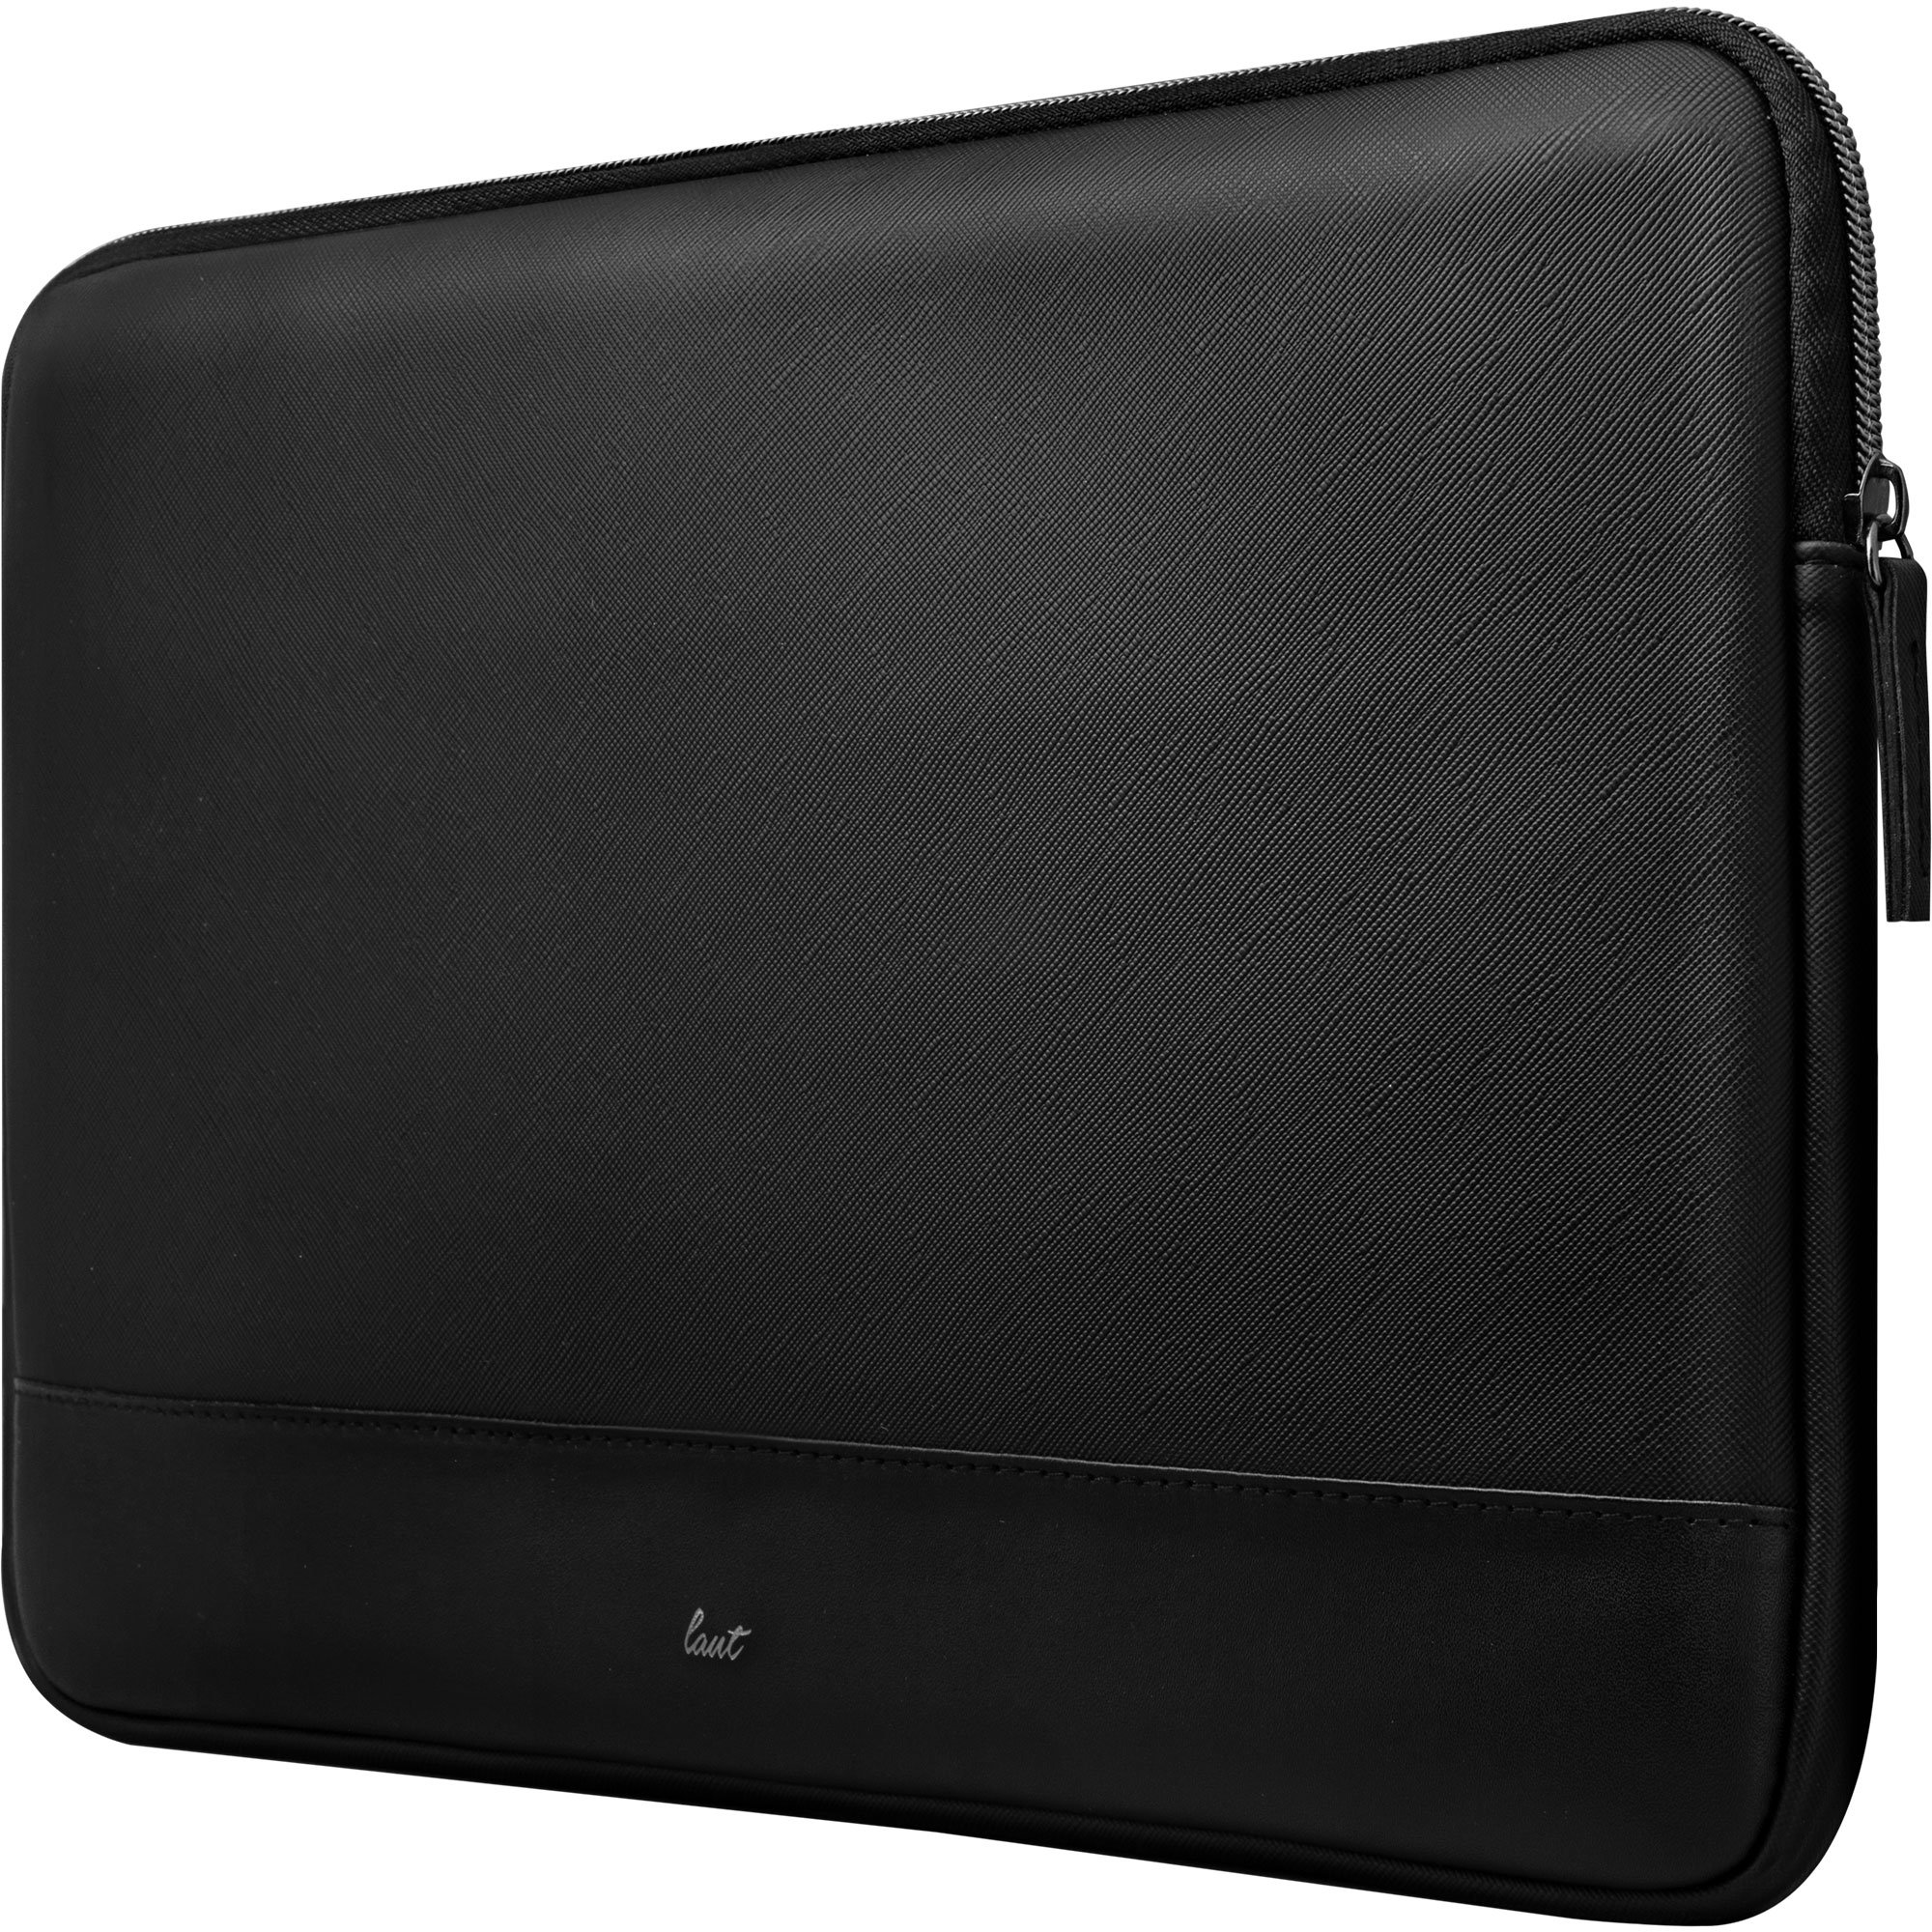 Macbook Leather Sleeve Giá Tốt T09/2023 | Mua tại Lazada.vn